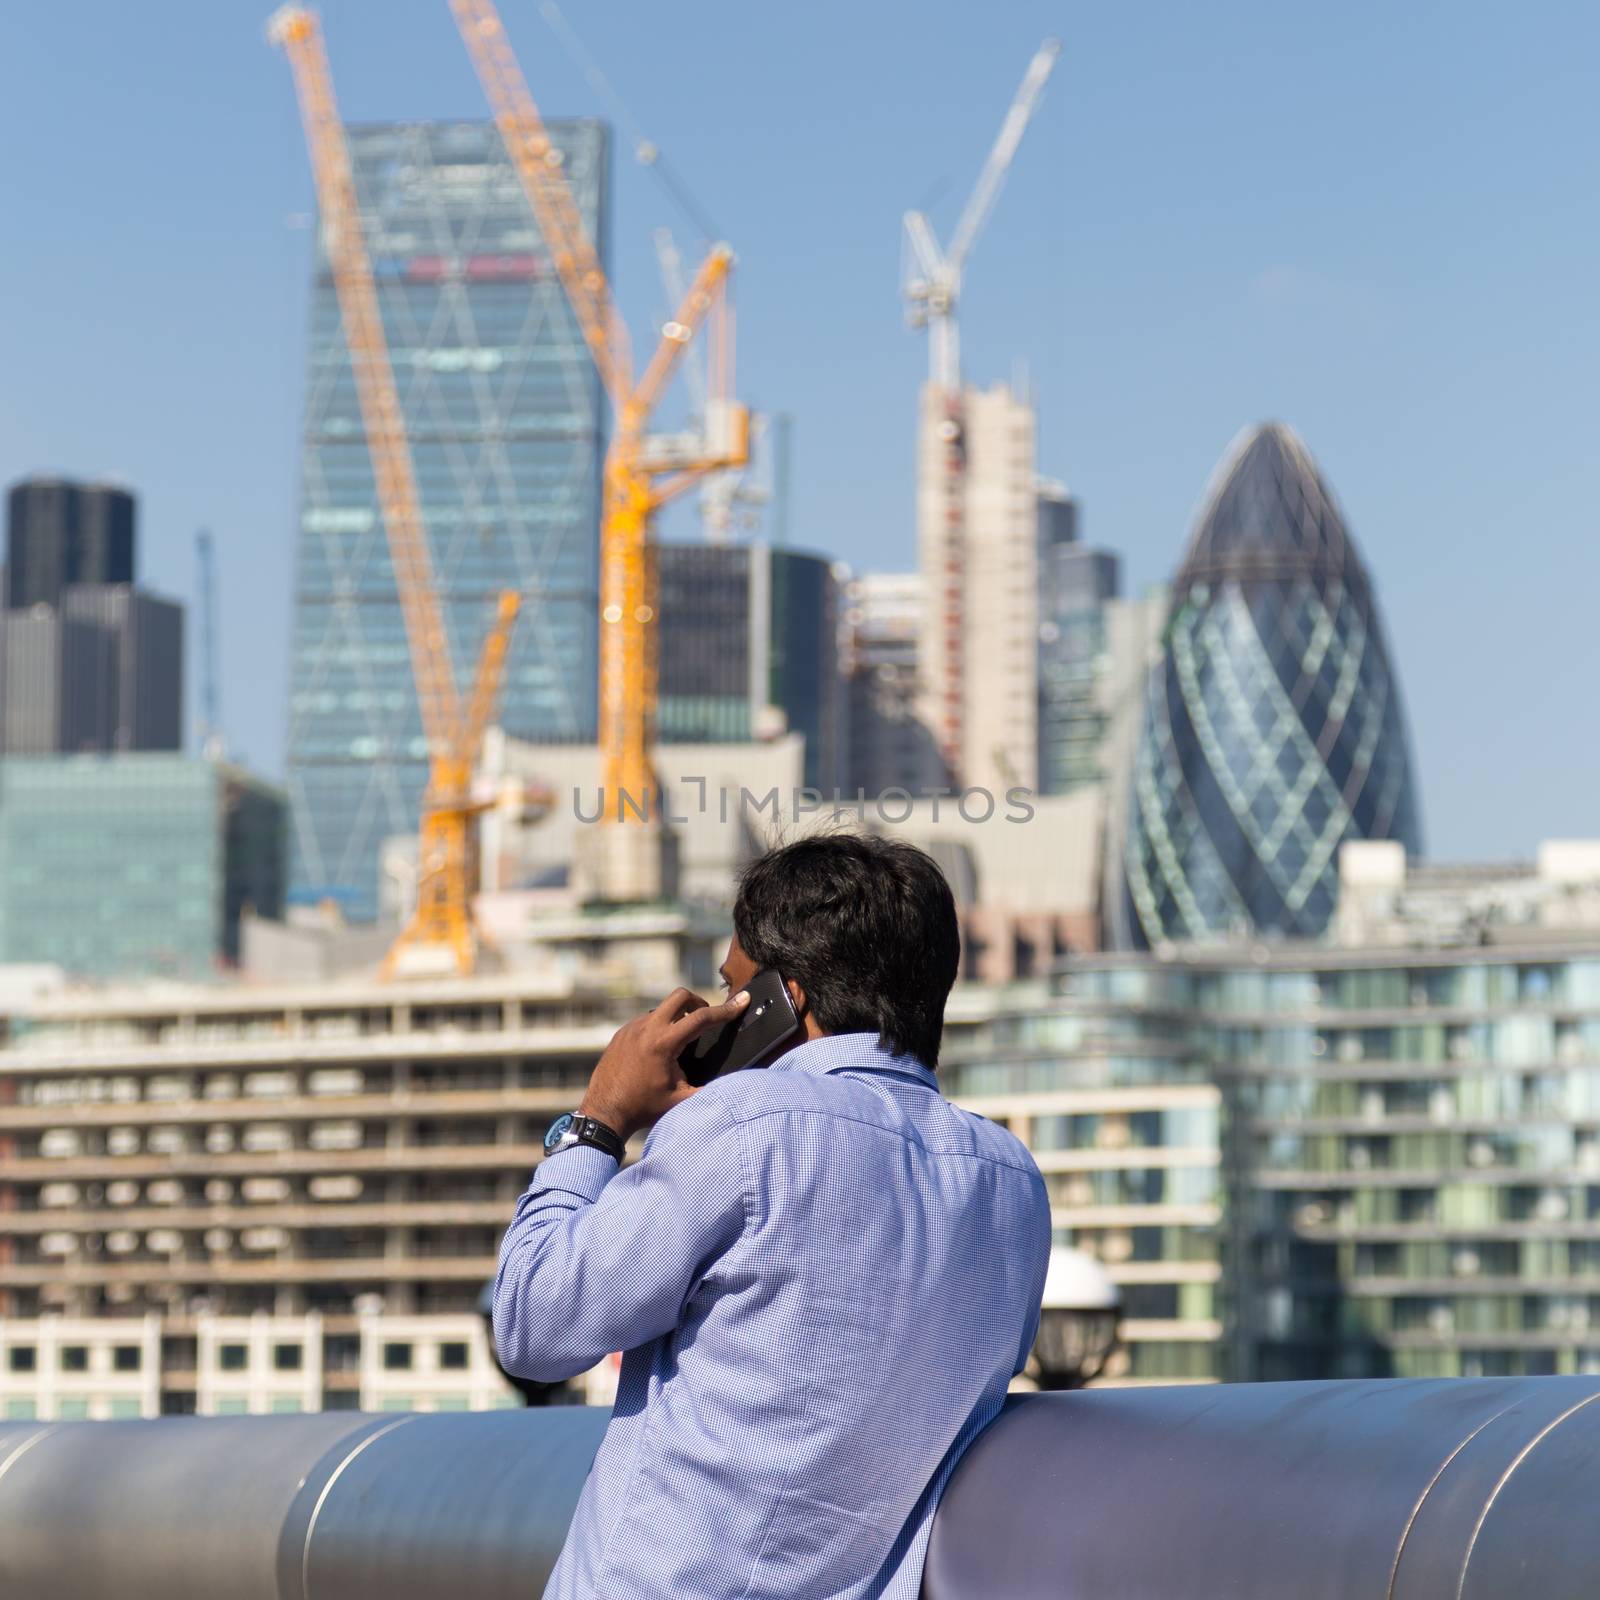 International businessman talking on mobile phone outdoor in London city, UK. by kasto